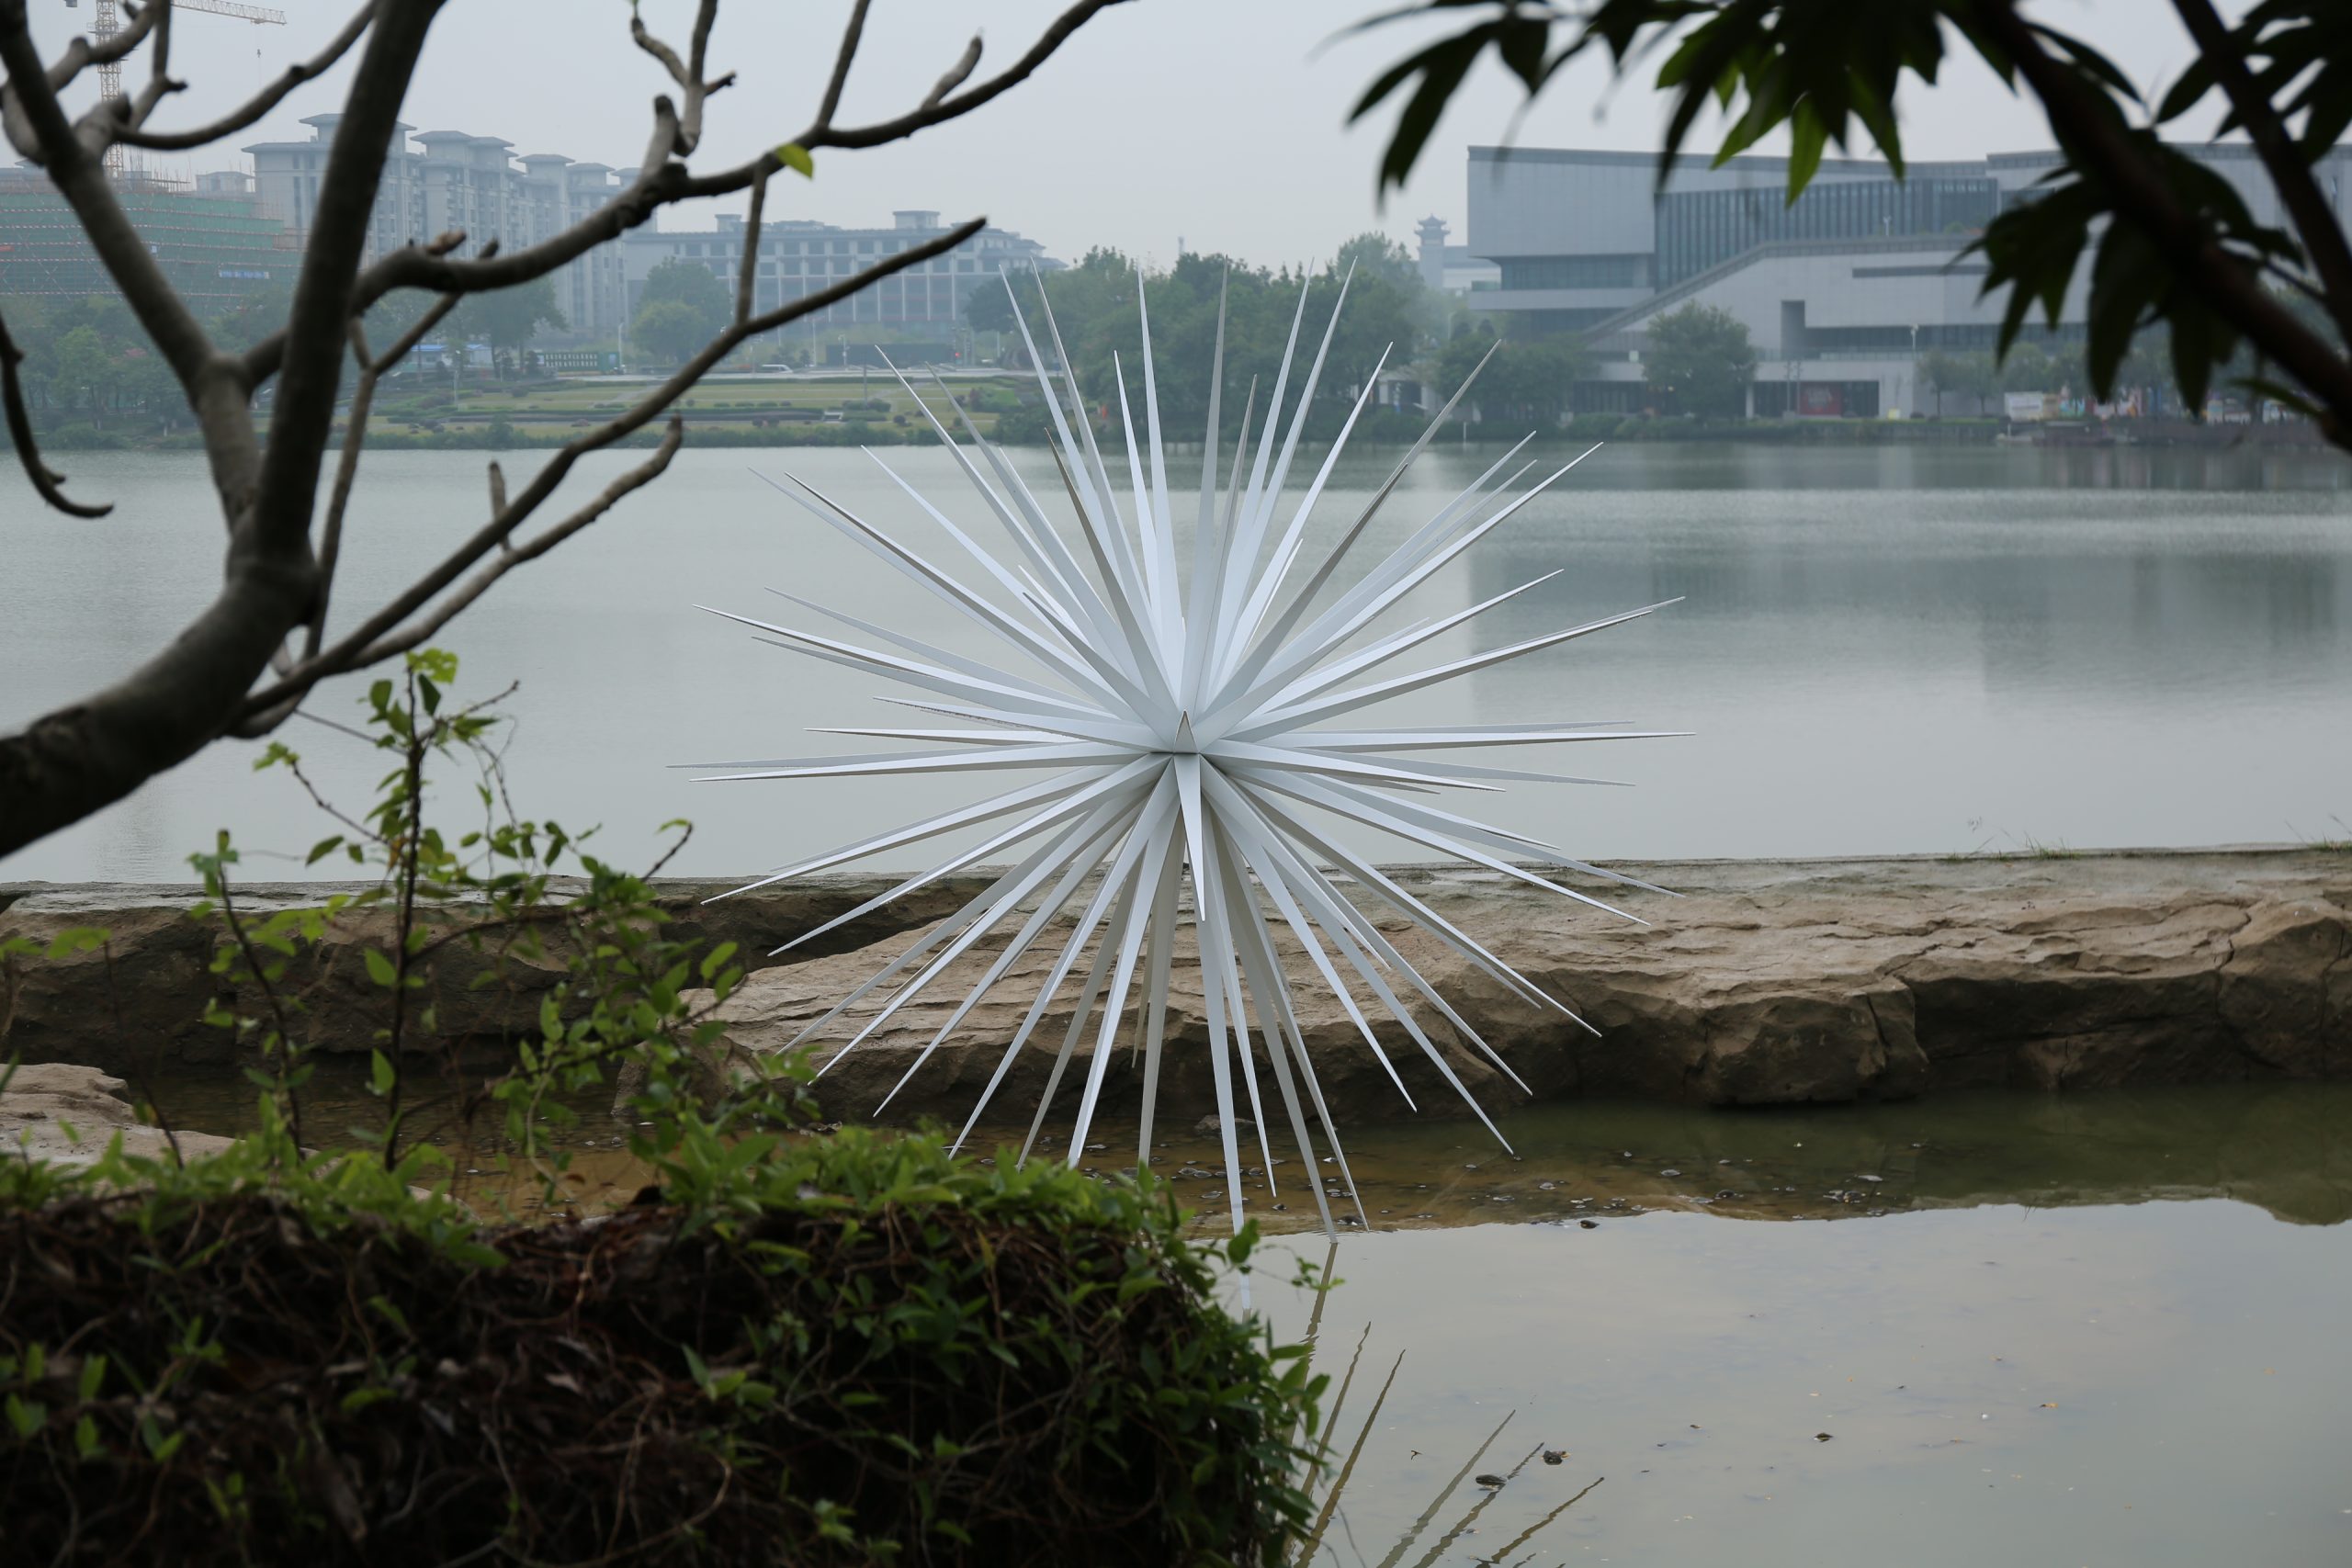 Norman Mooney Presents Windseed at Nanhai Field Art, Foshan, China